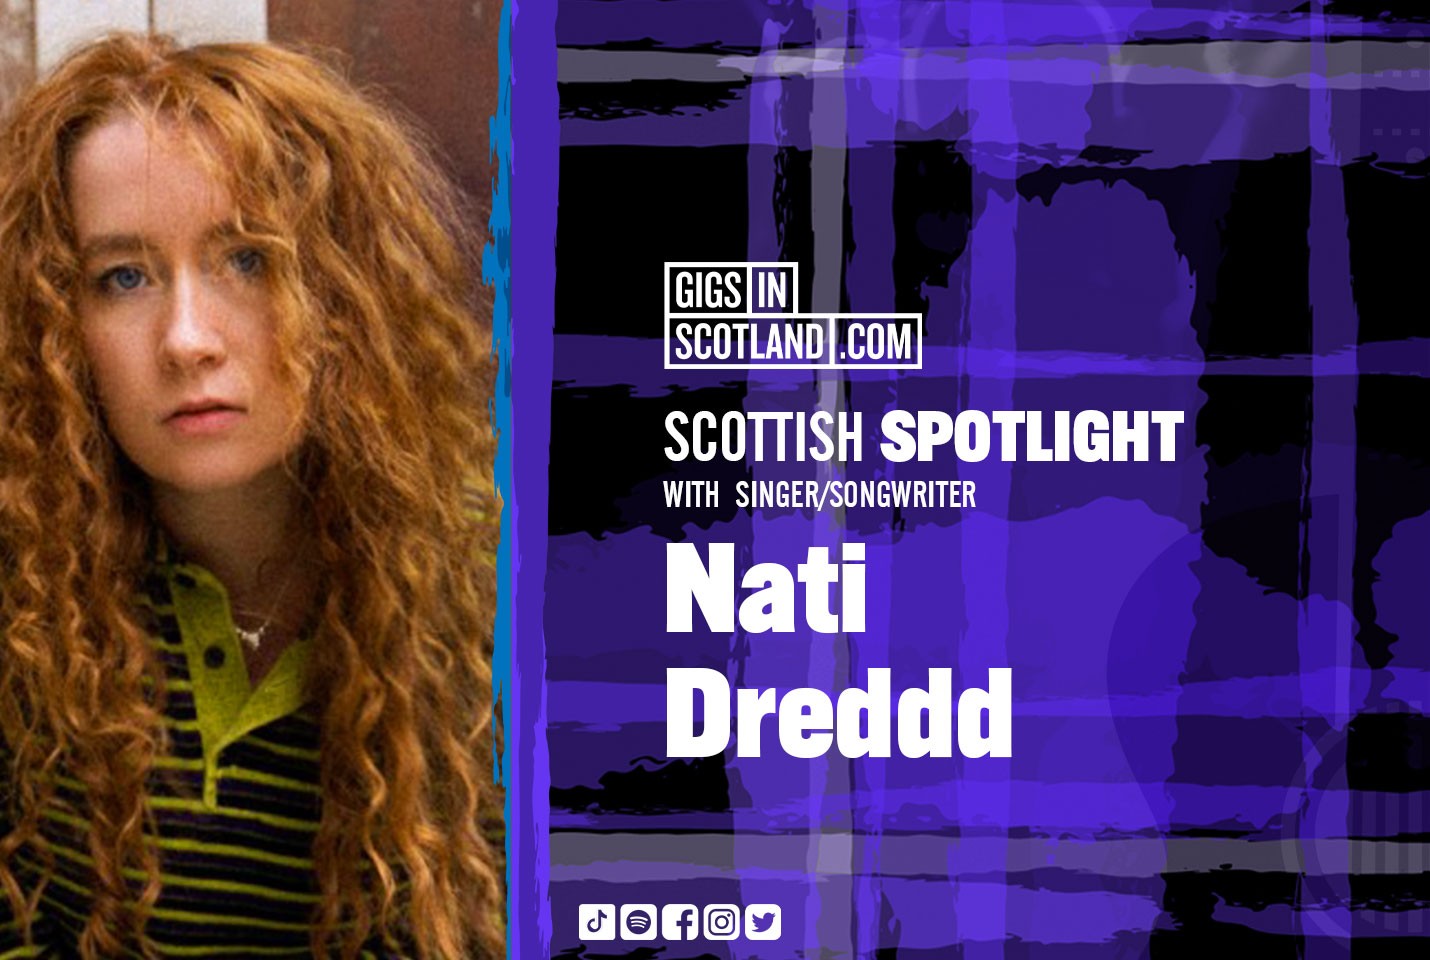 Nati Dreddd | Scottish Spotlight